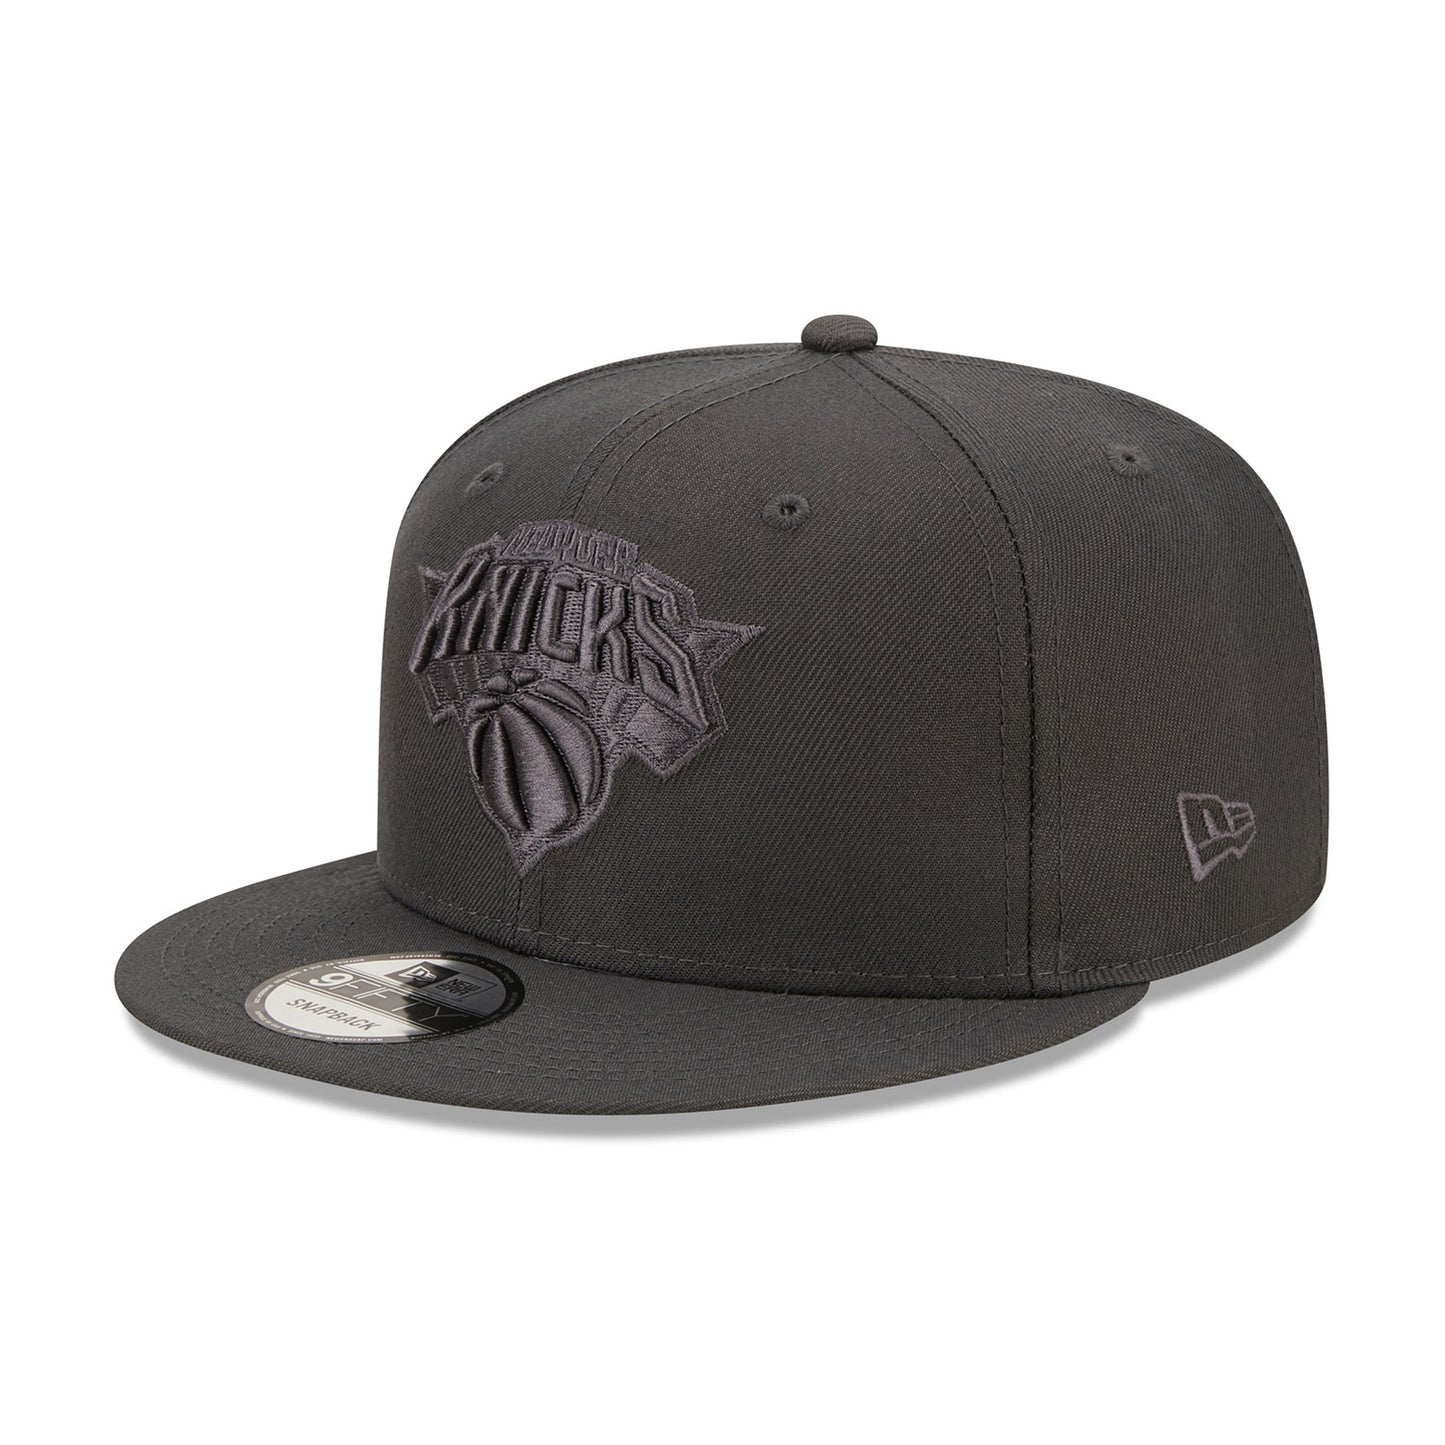 New Era Knicks Tonal Charcoal Snapback Hat - Angled Left Side View